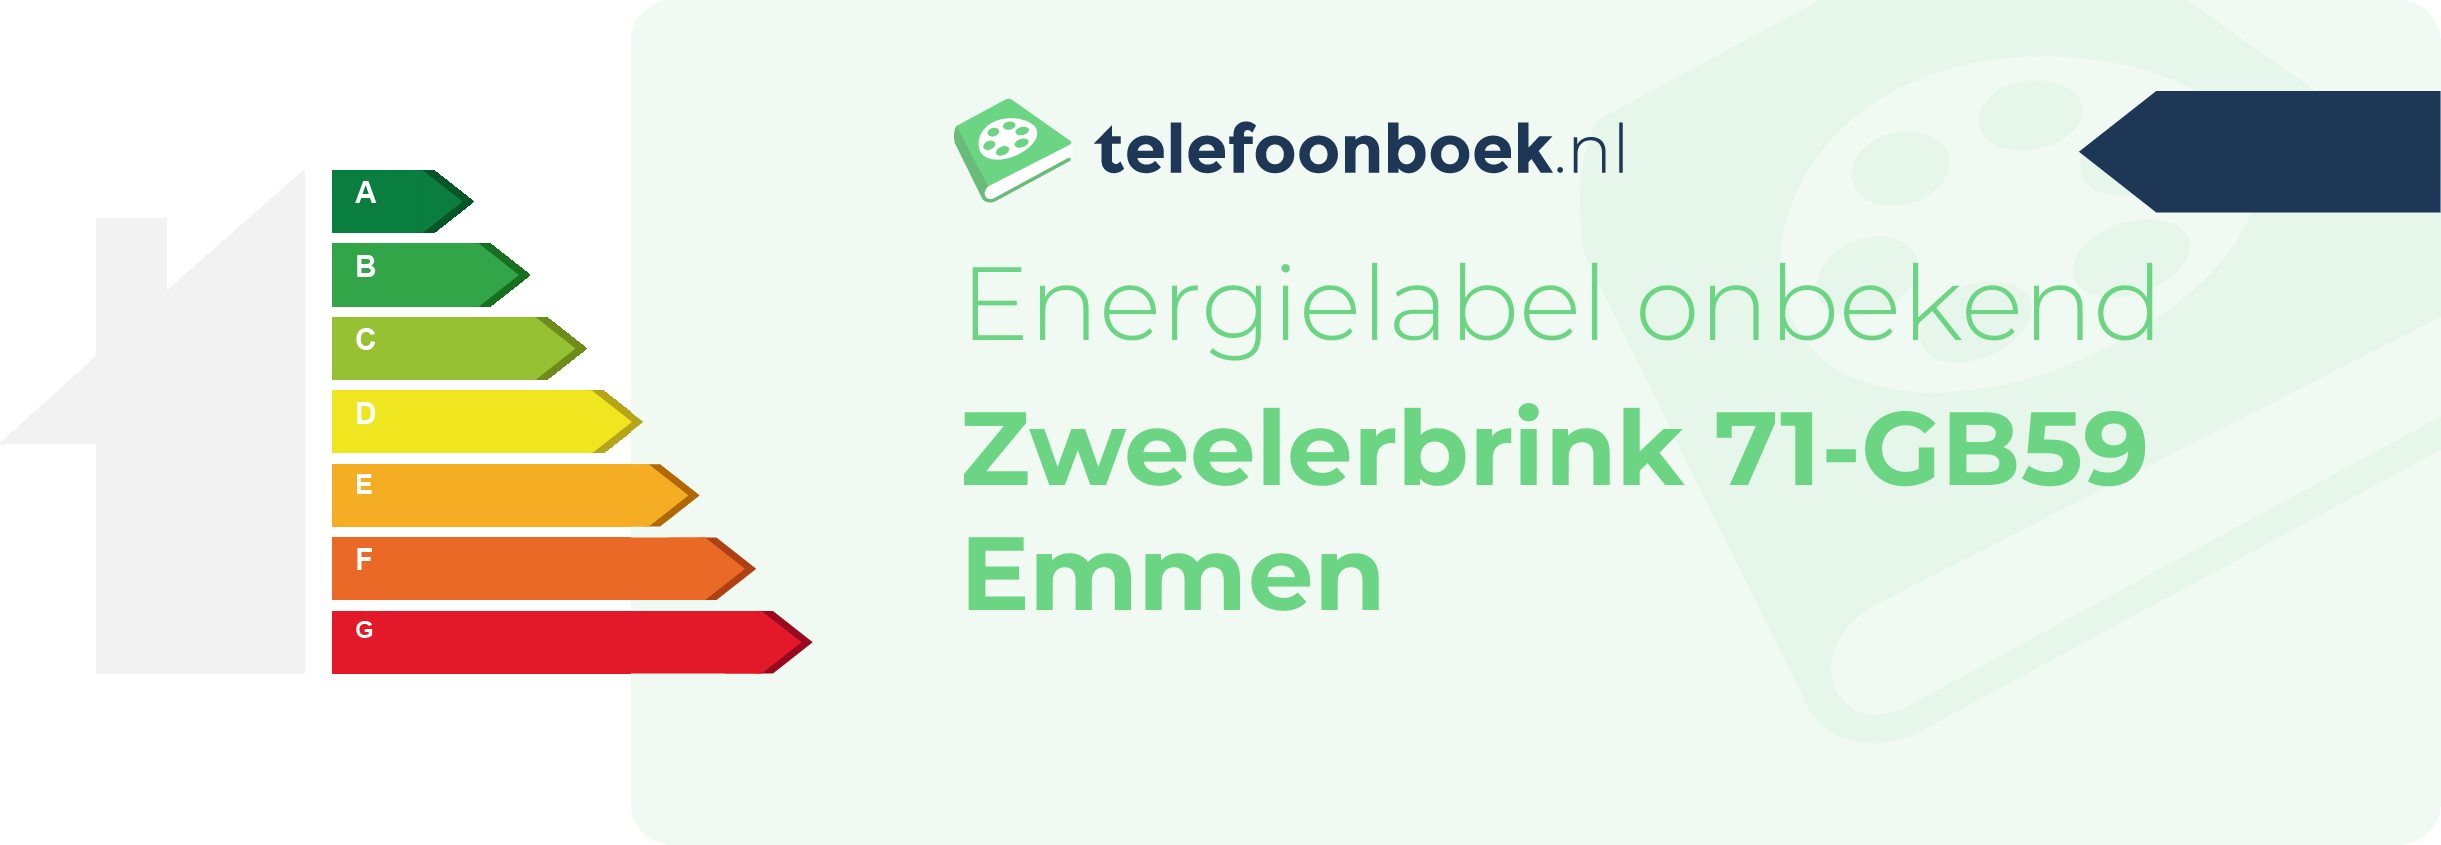 Energielabel Zweelerbrink 71-GB59 Emmen